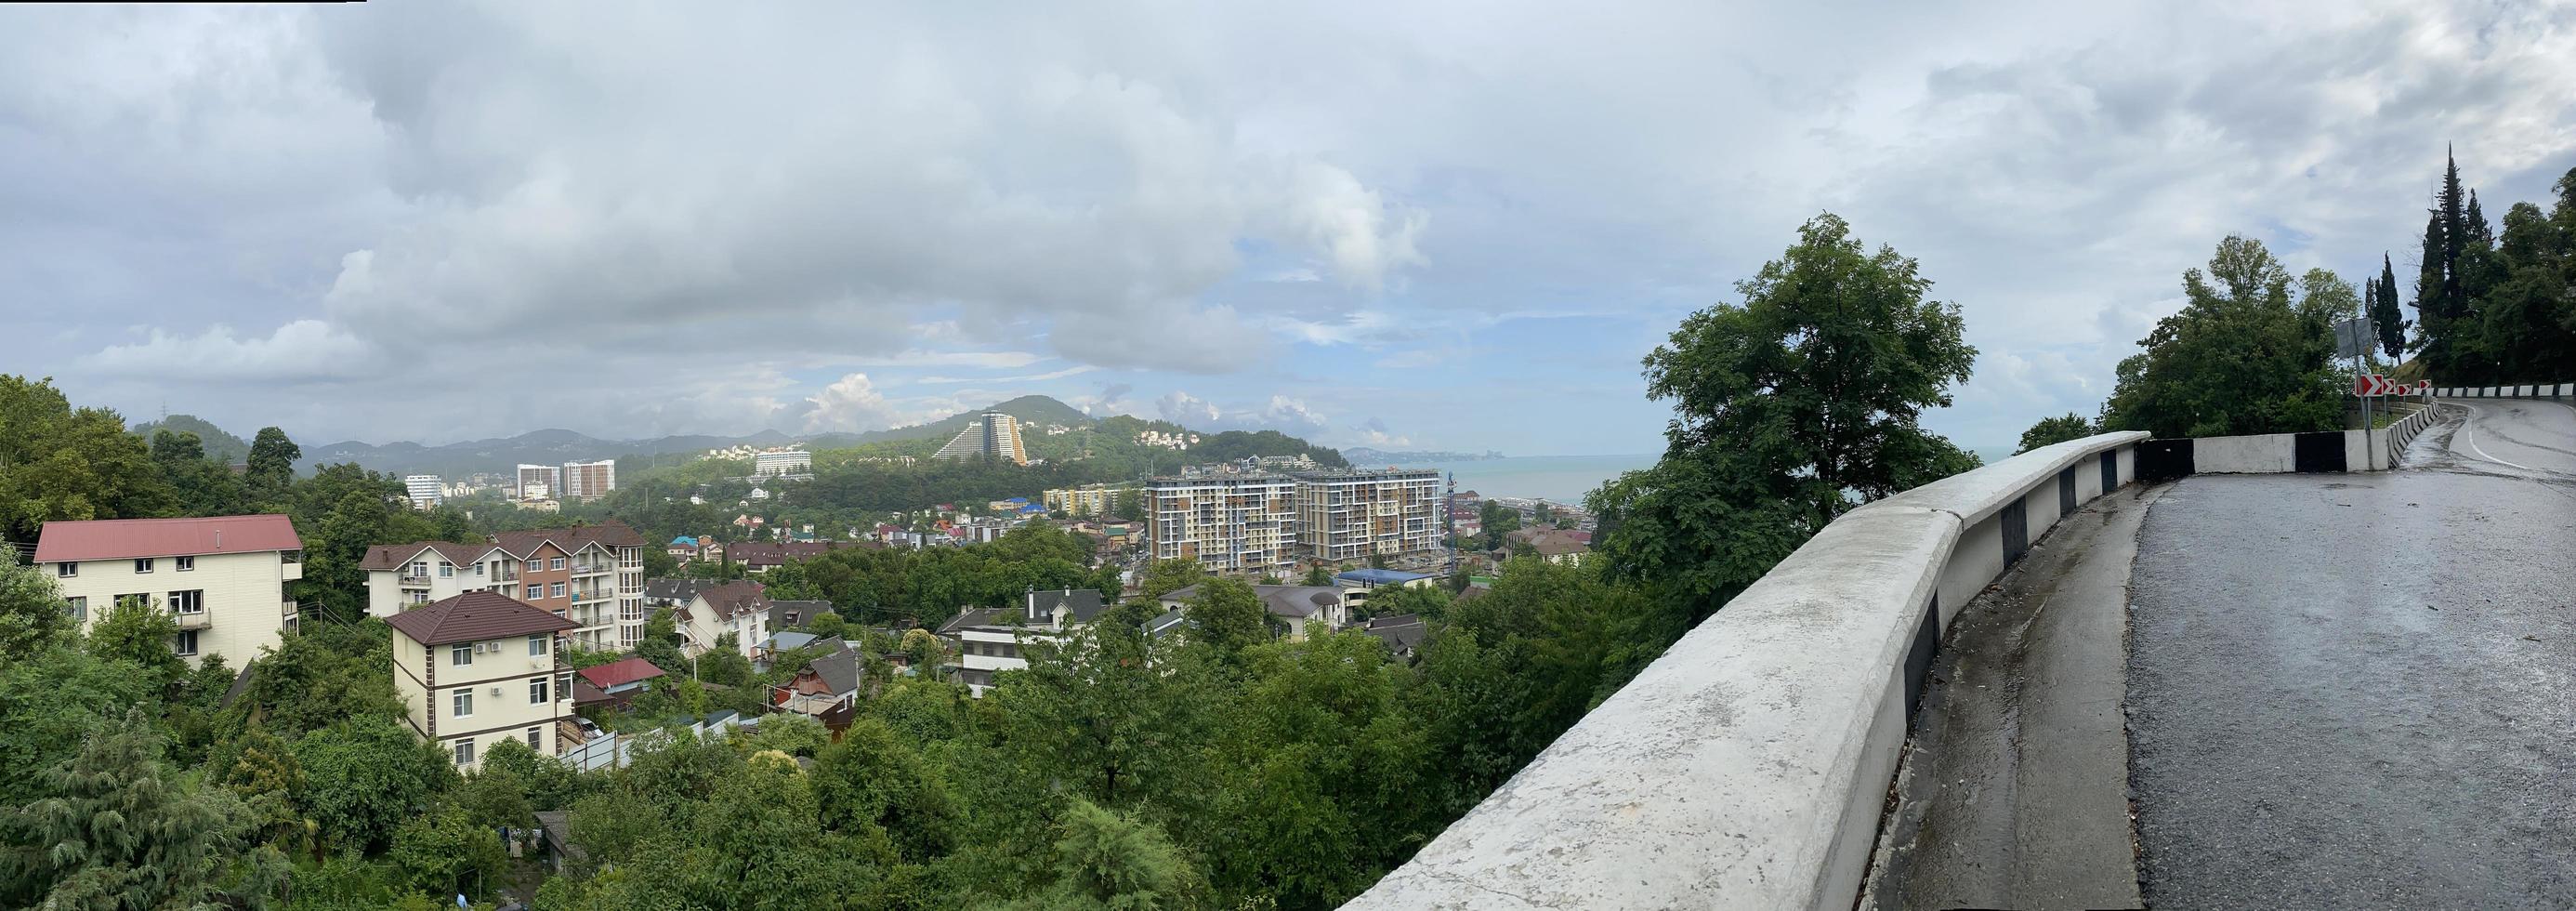 panorama du paysage urbain de dagomys, vue de dessus. photo